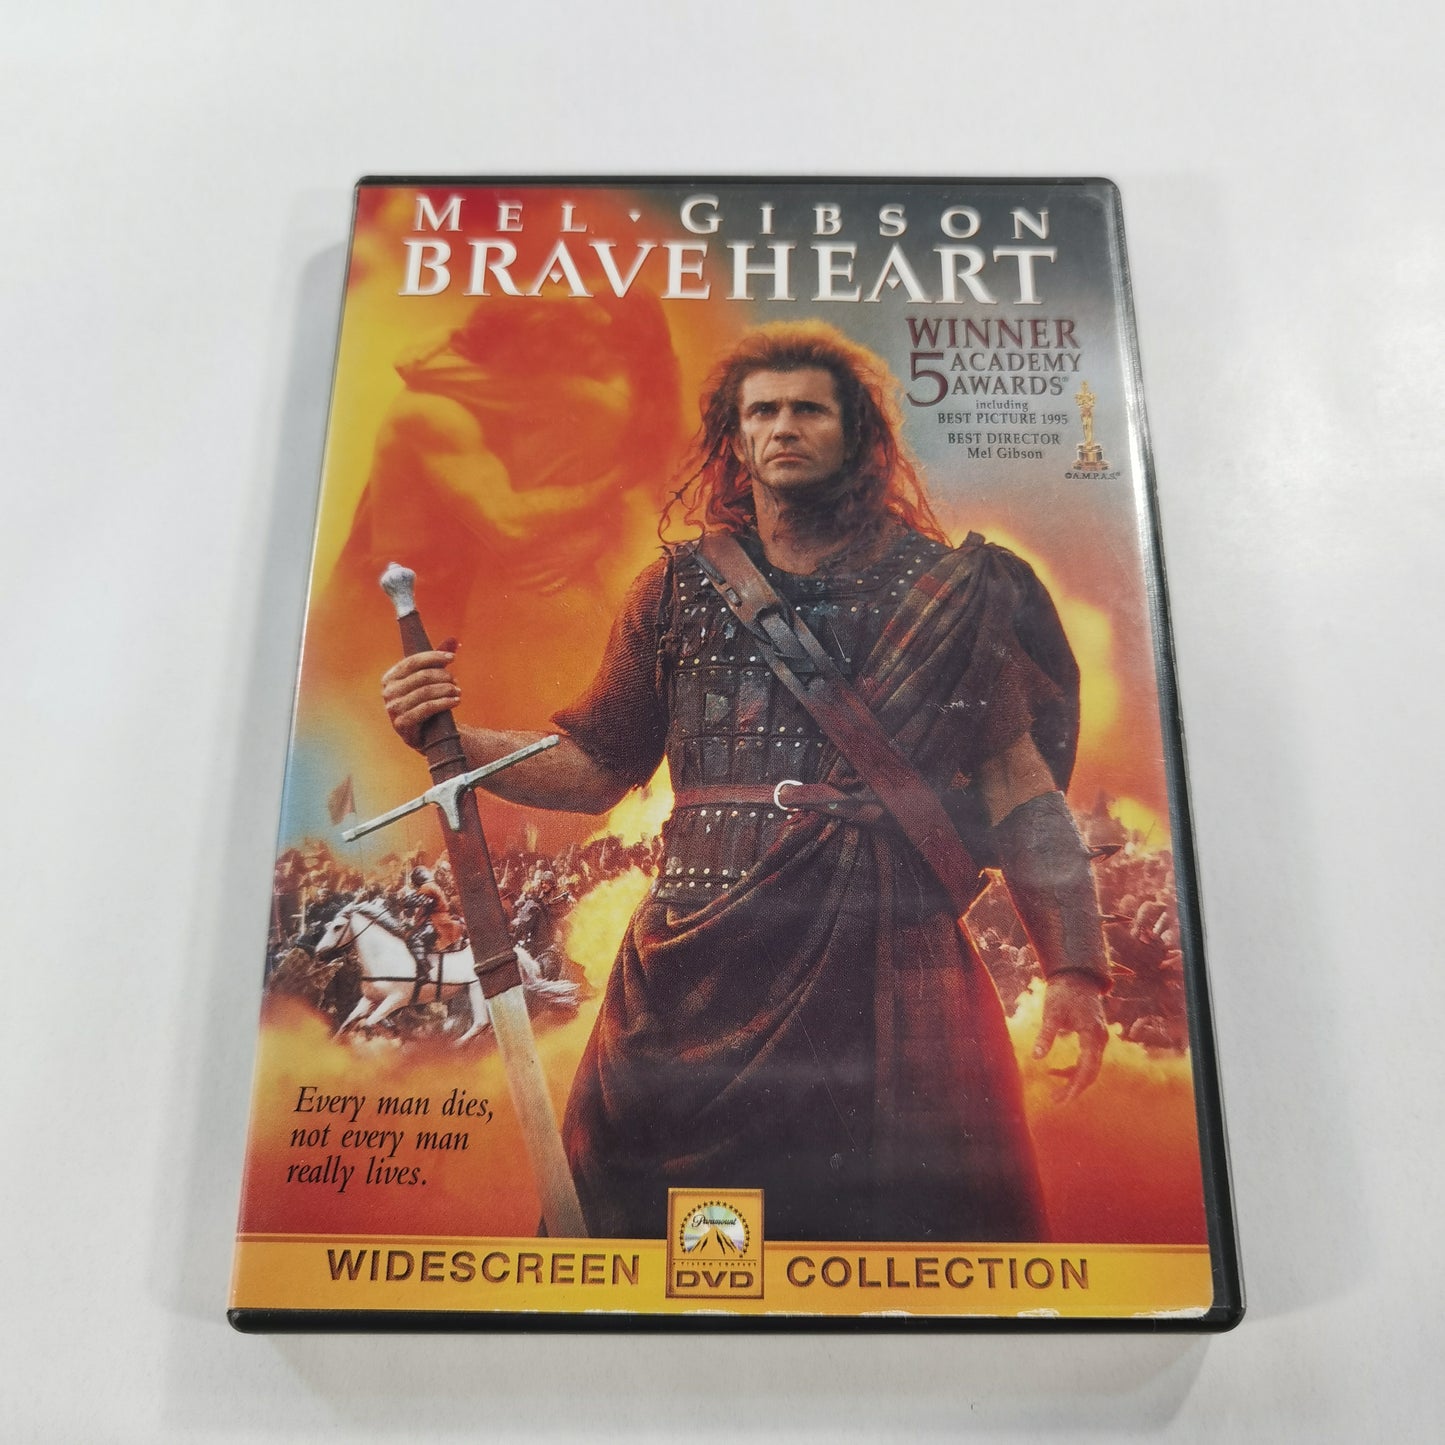 Braveheart (1995) - DVD US 2000